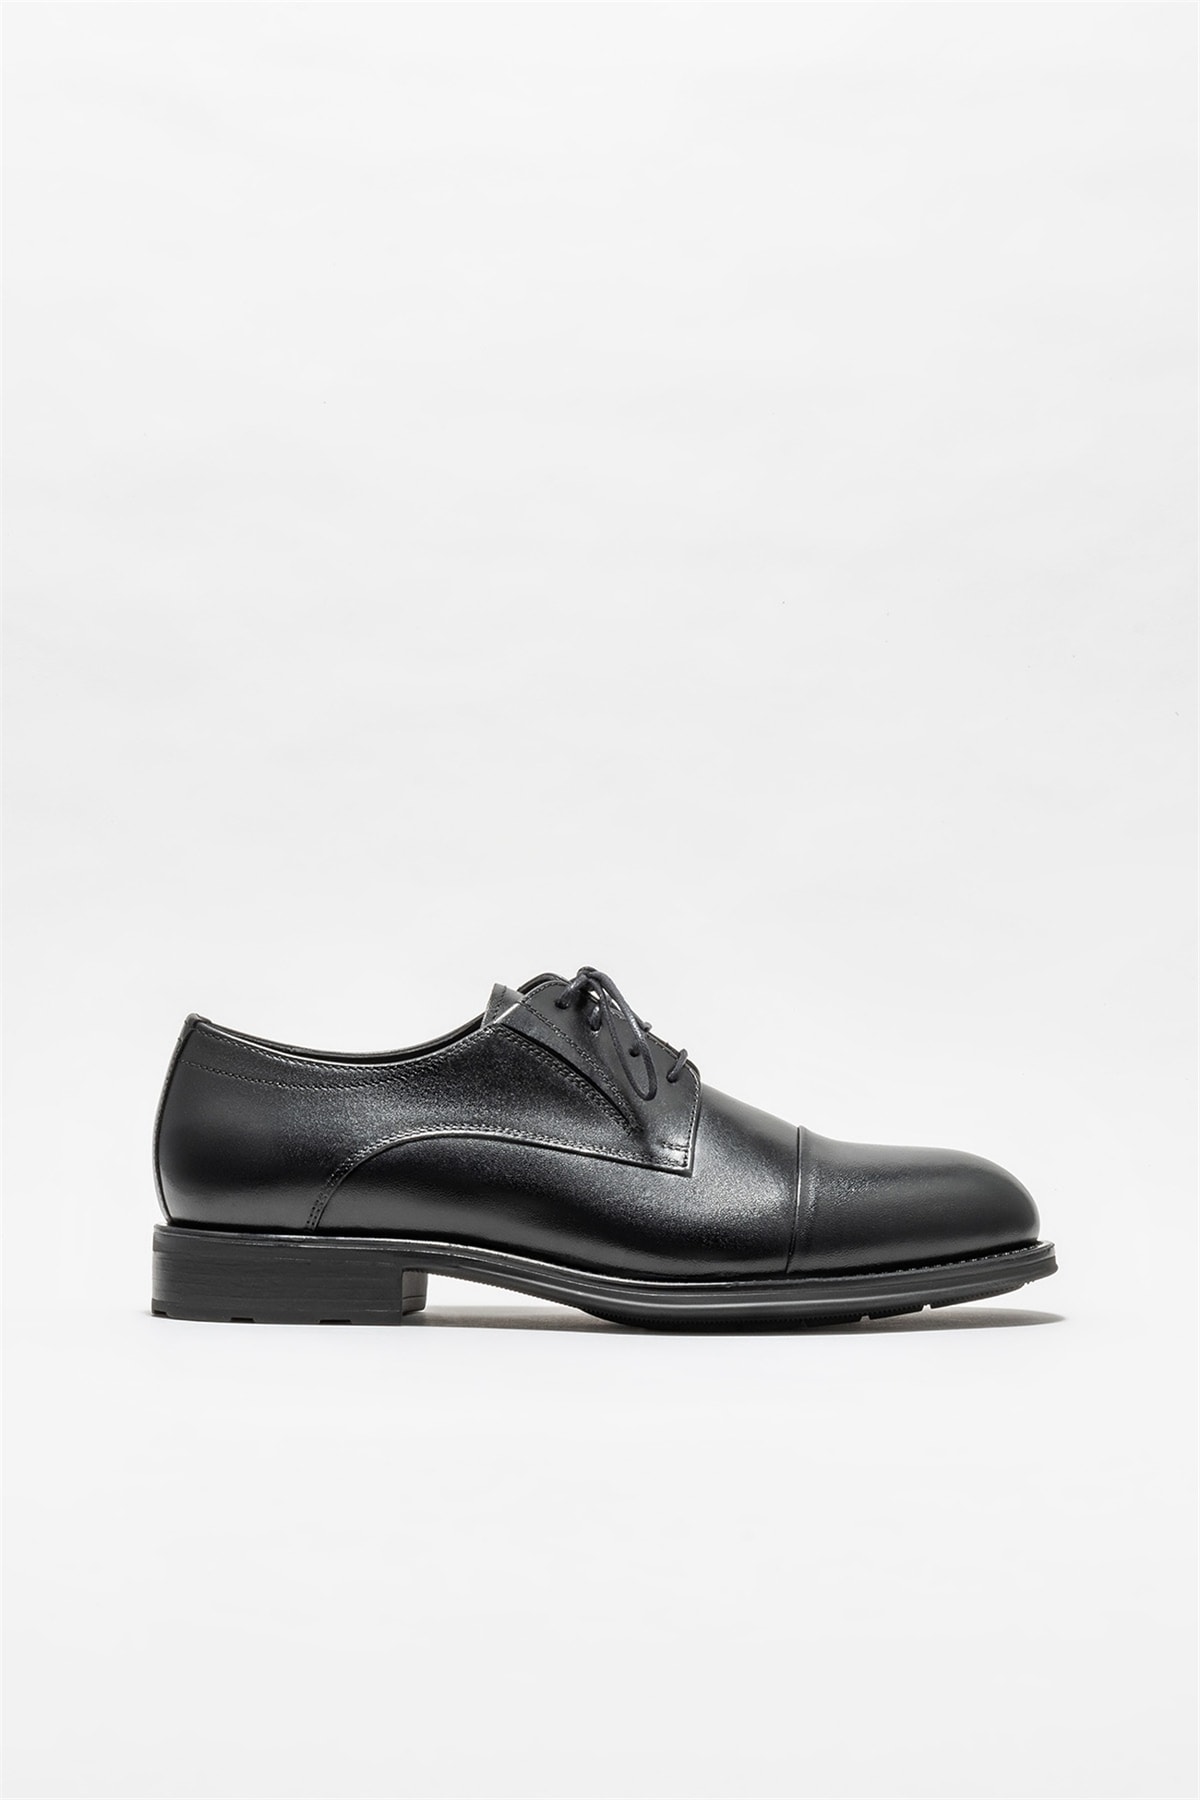 Elle Shoes Siyah Deri Erkek Klasik Ayakkabı